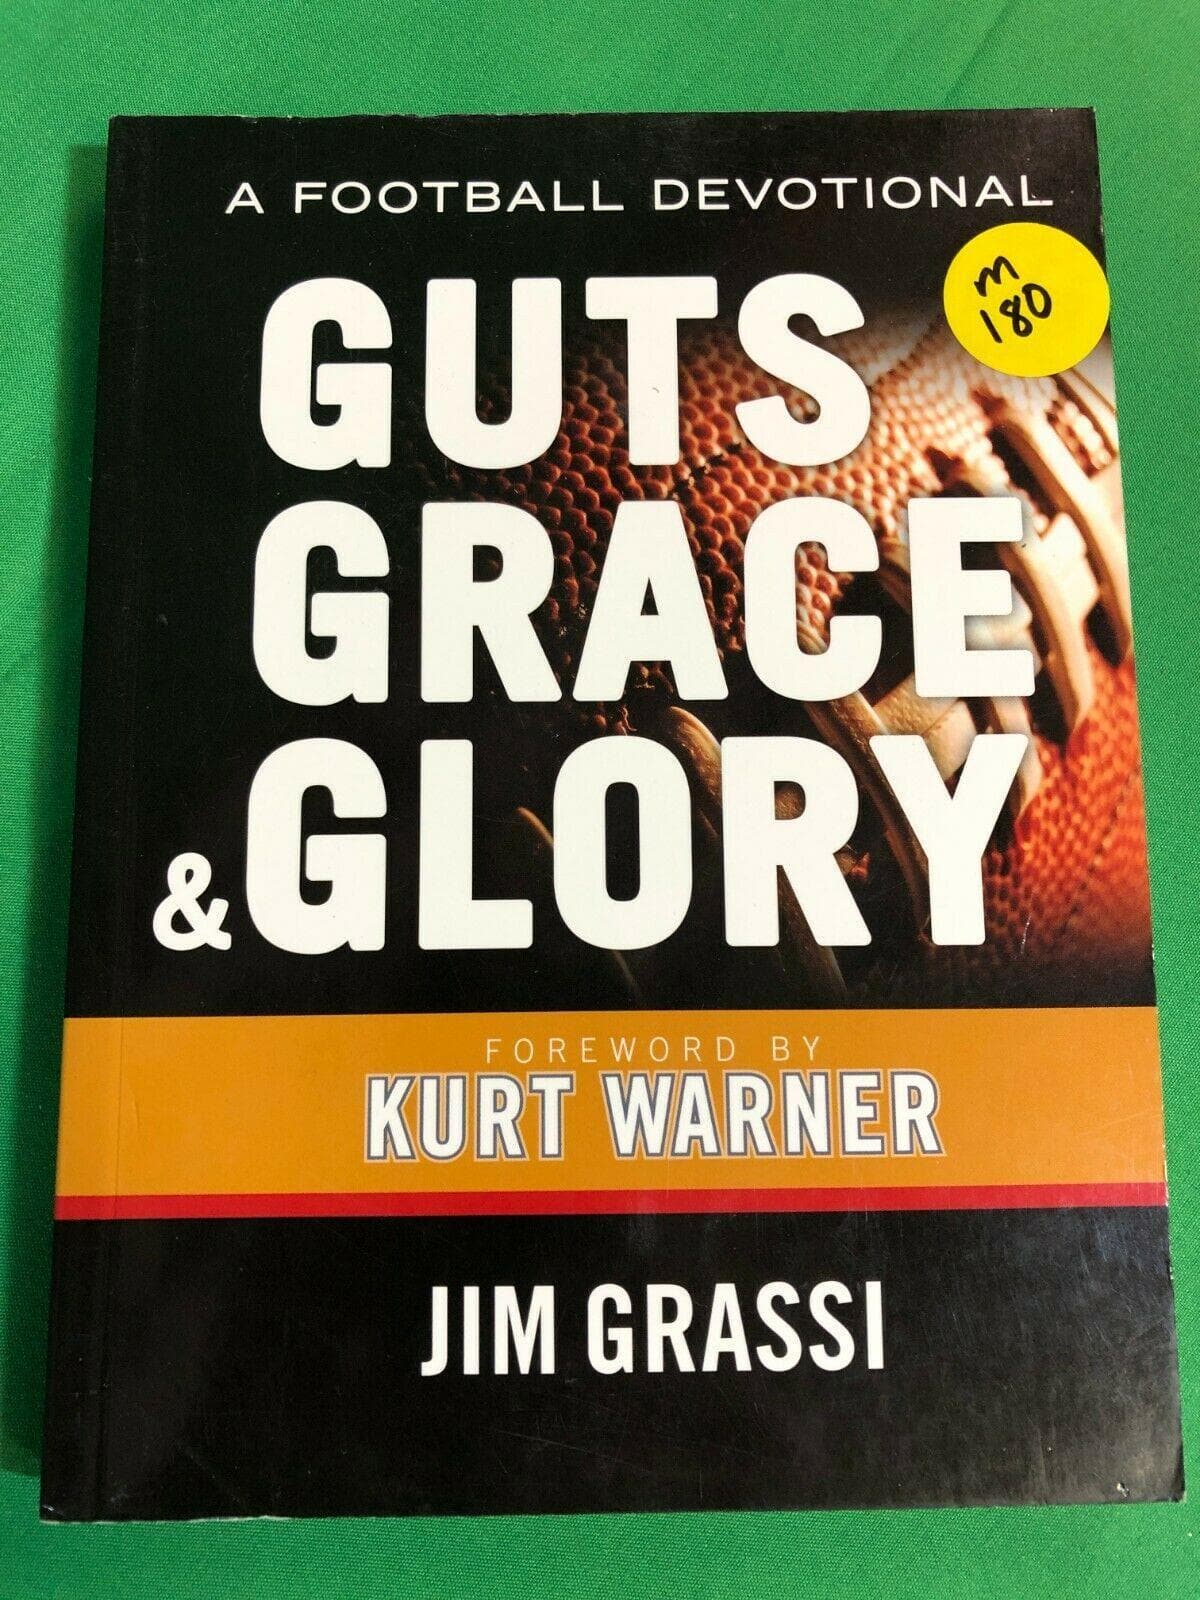 NFL NCAA American Football "Guts Grace & Glory" Devotional Book